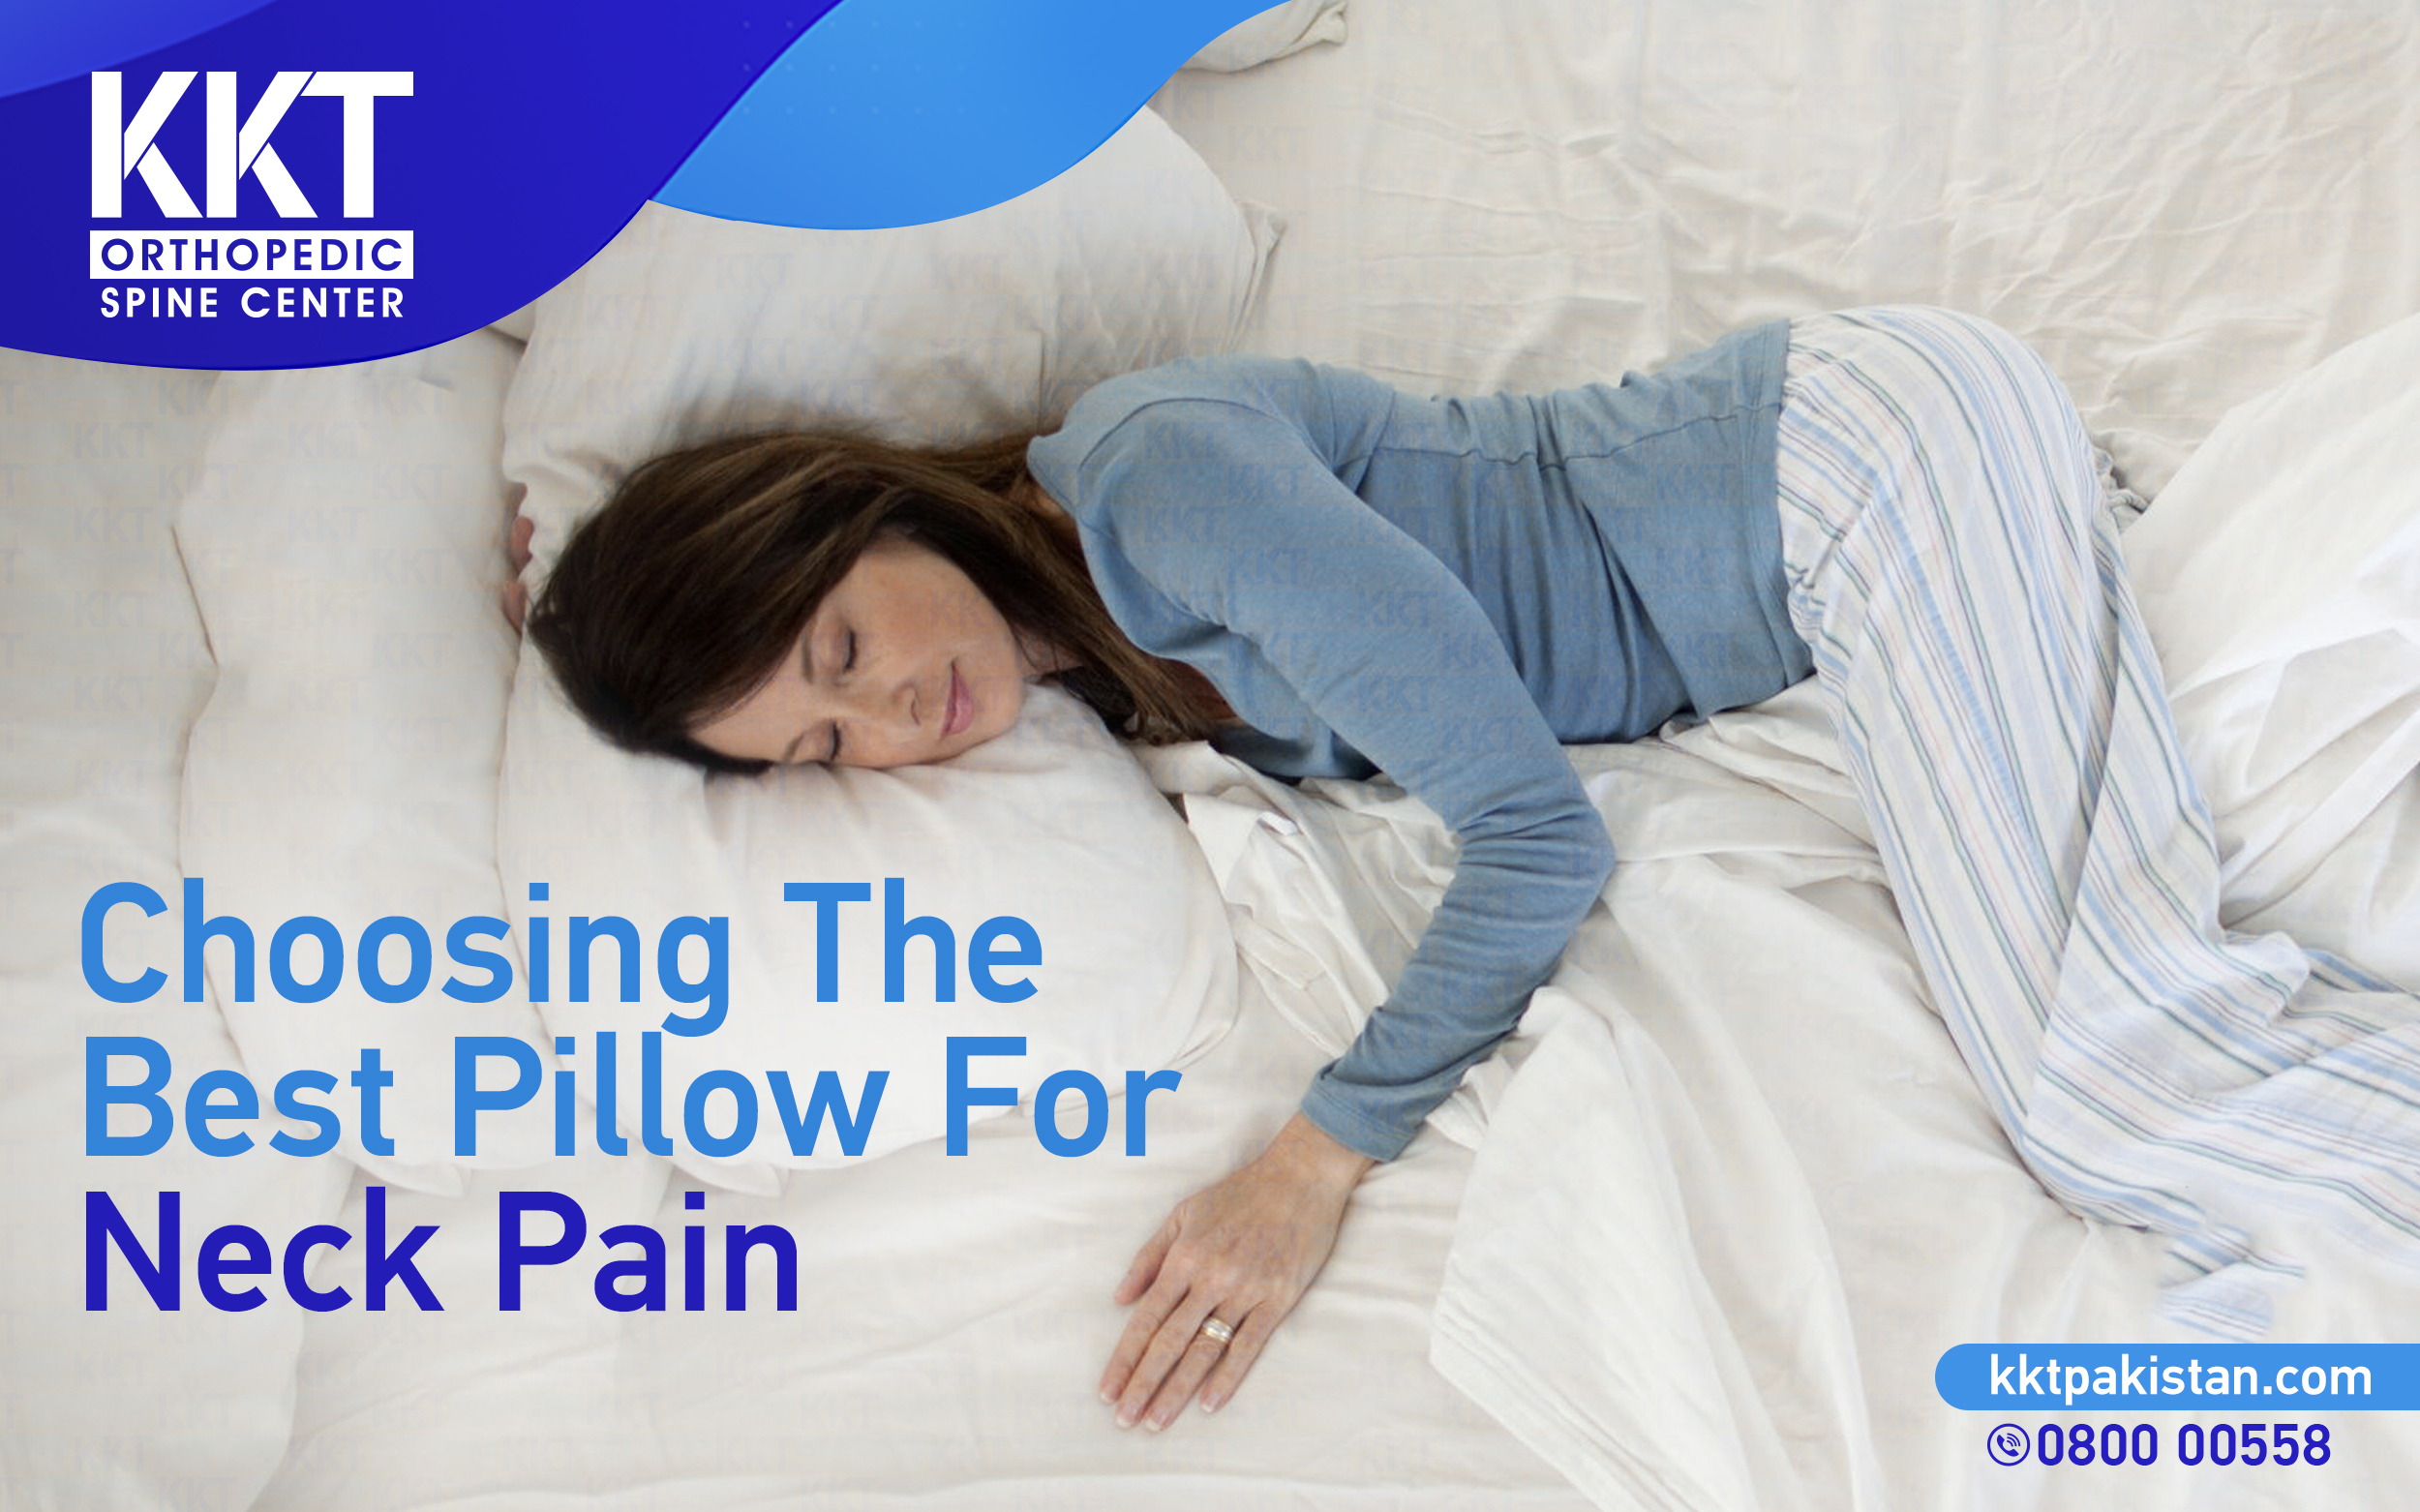 Choosing the Best Pillow for Neck Pain